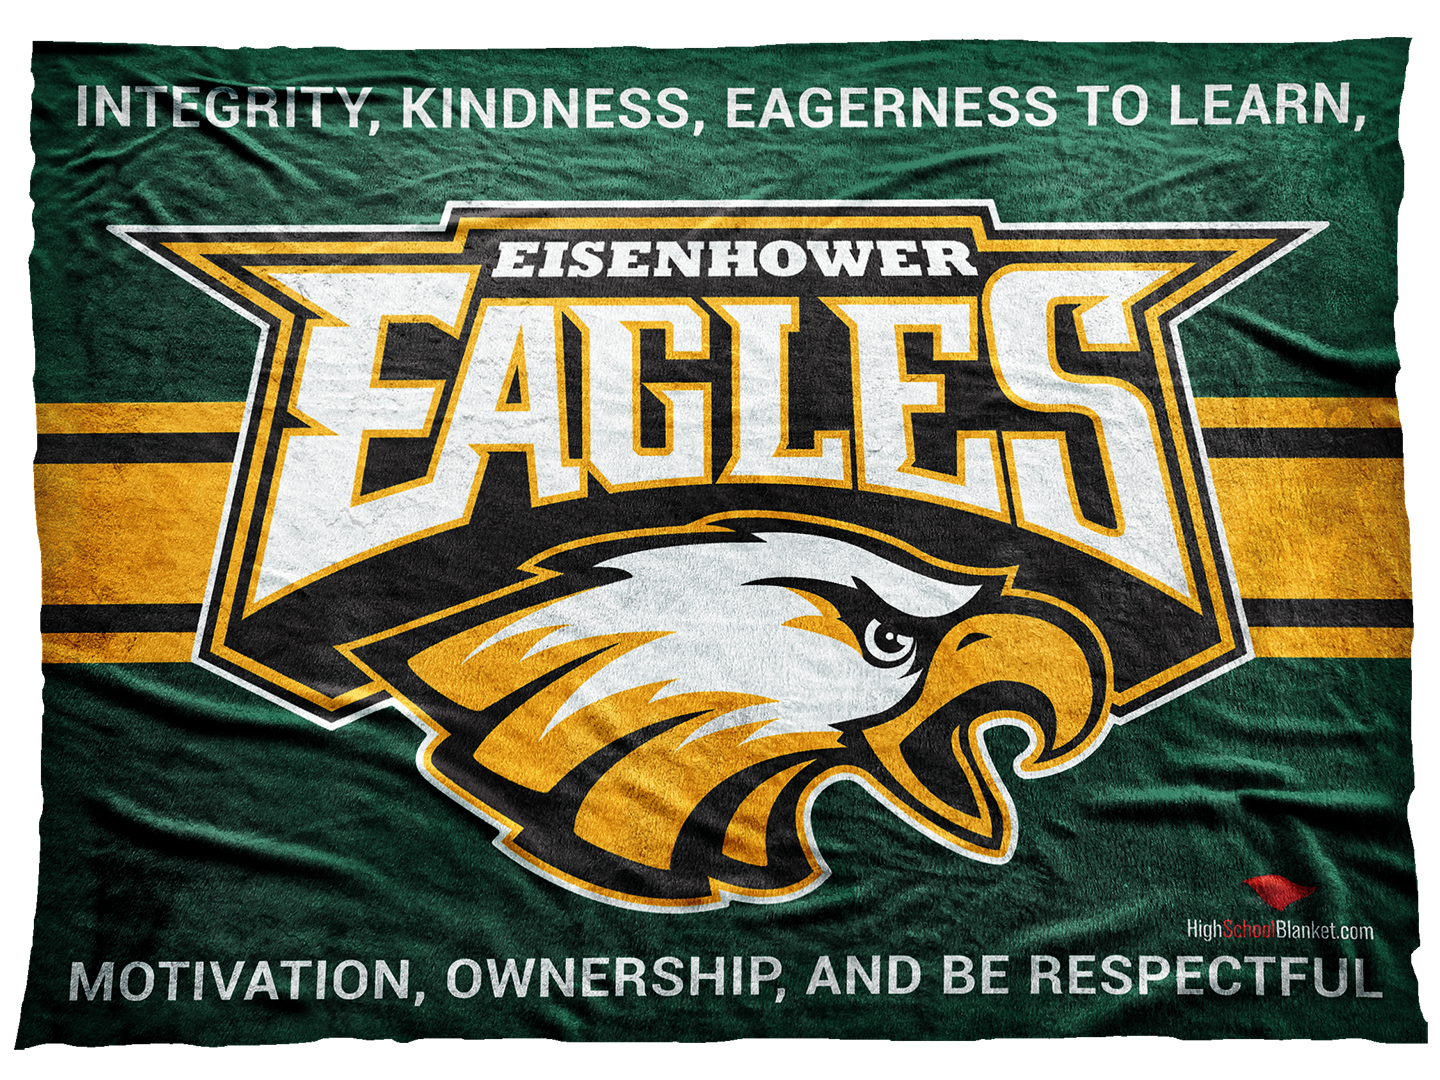 Eisenhower Eagles